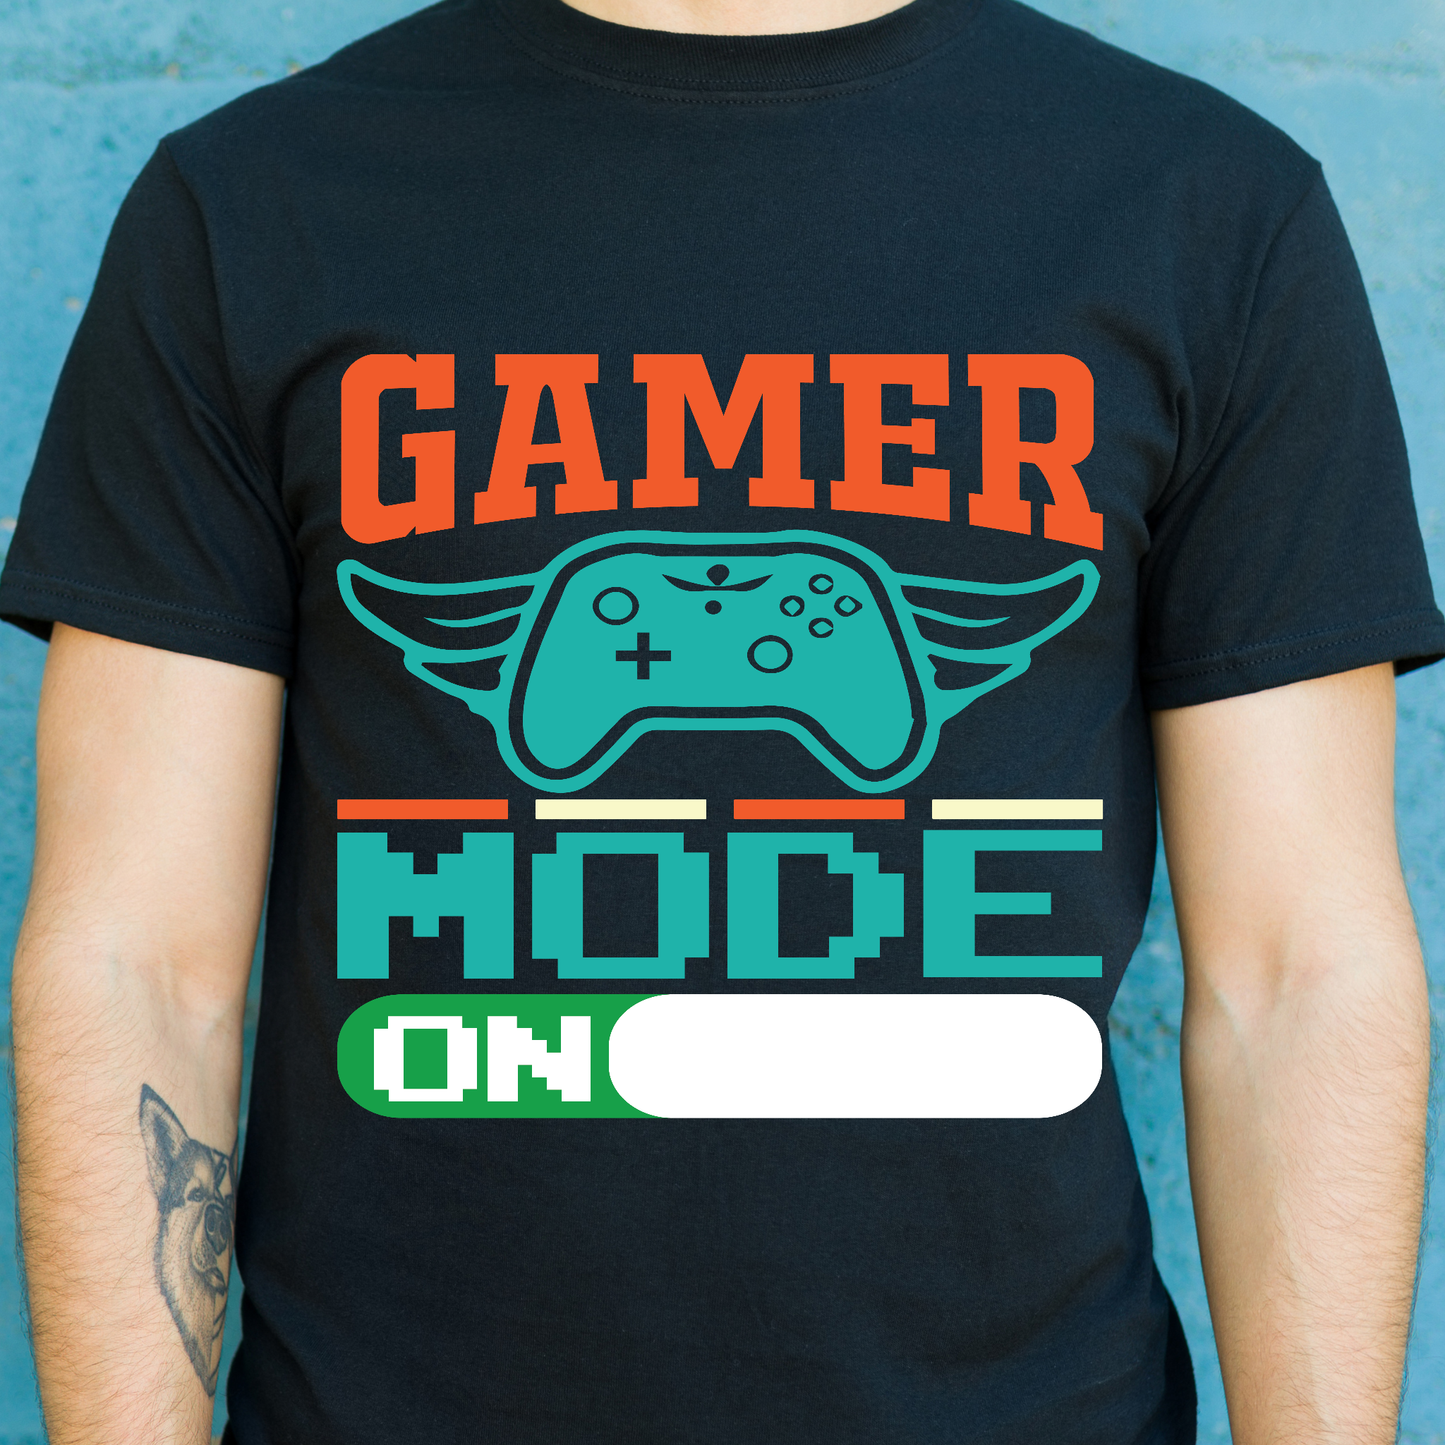 Gamer mode on video gamer nerdy Men's t-shirt - Premium t-shirt from Lees Krazy Teez - Just $19.95! Shop now at Lees Krazy Teez